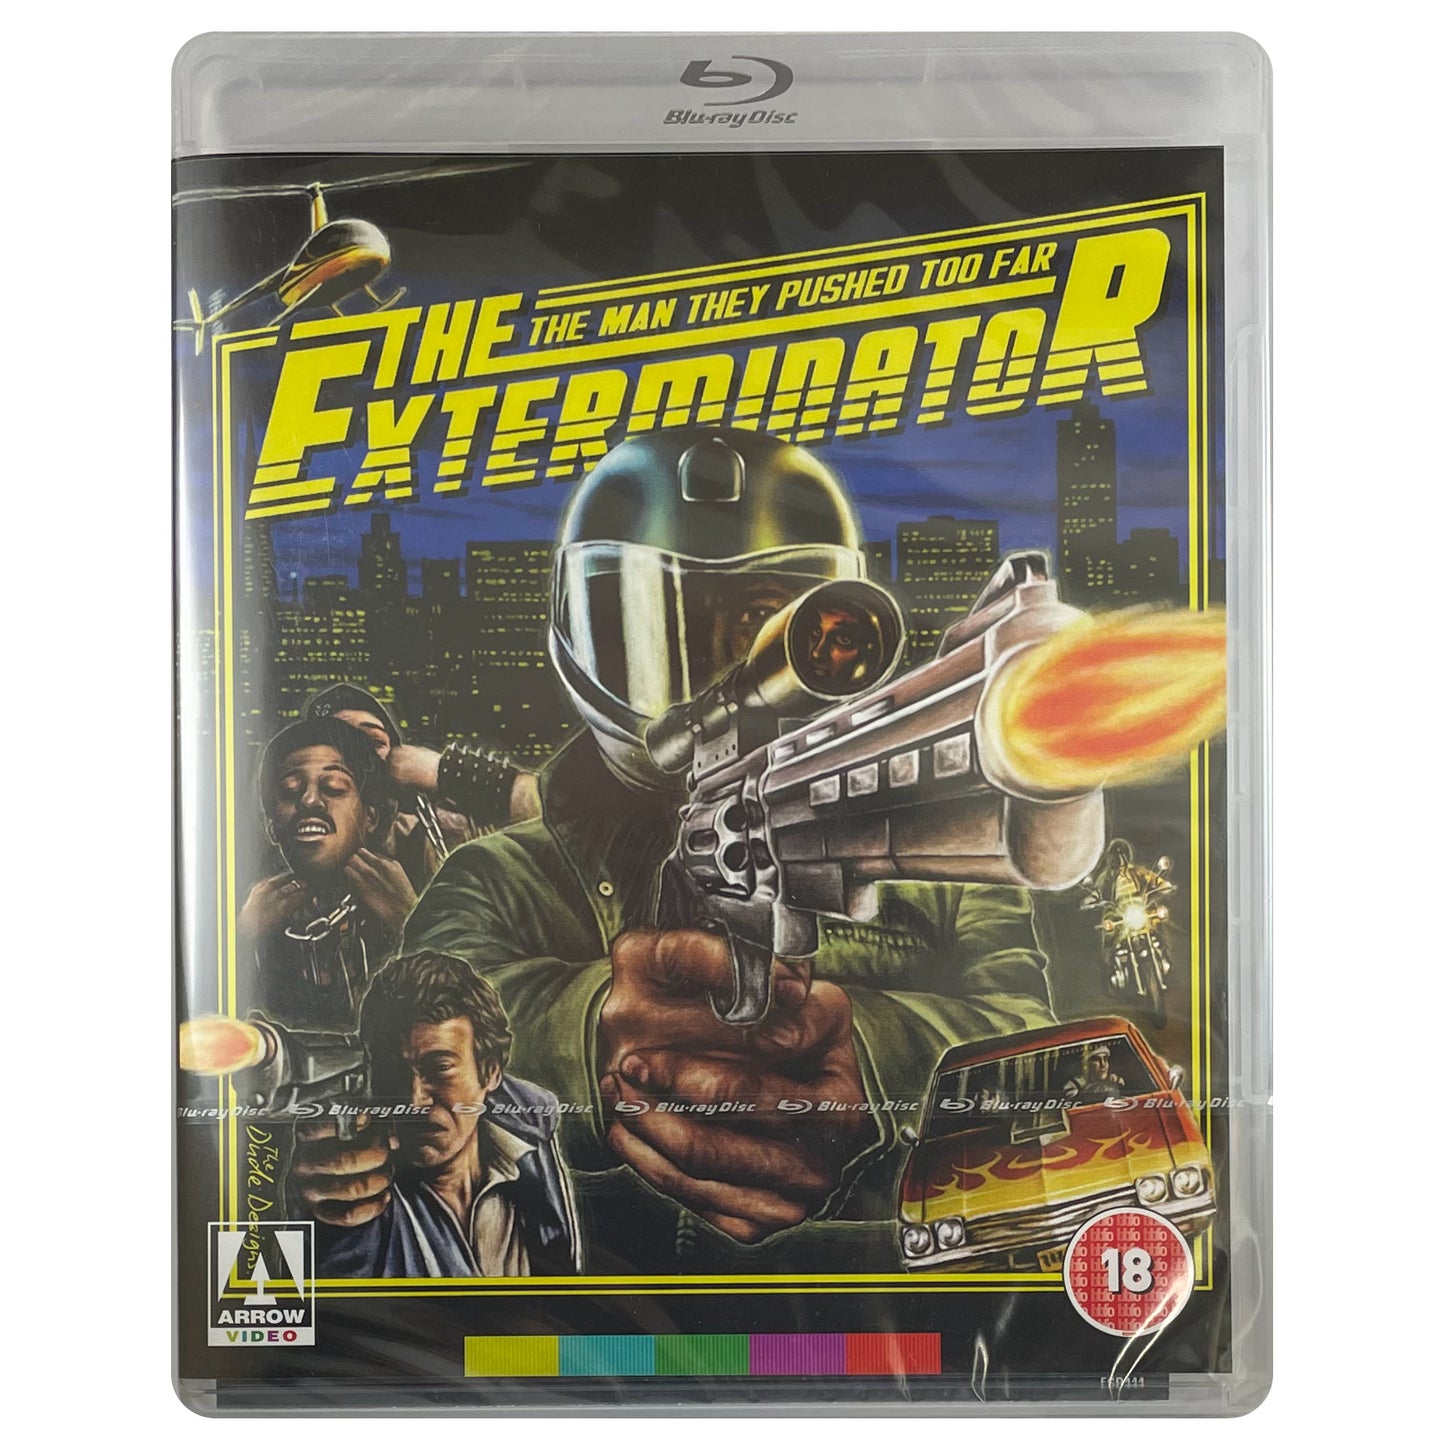 The Exterminator Blu-Ray